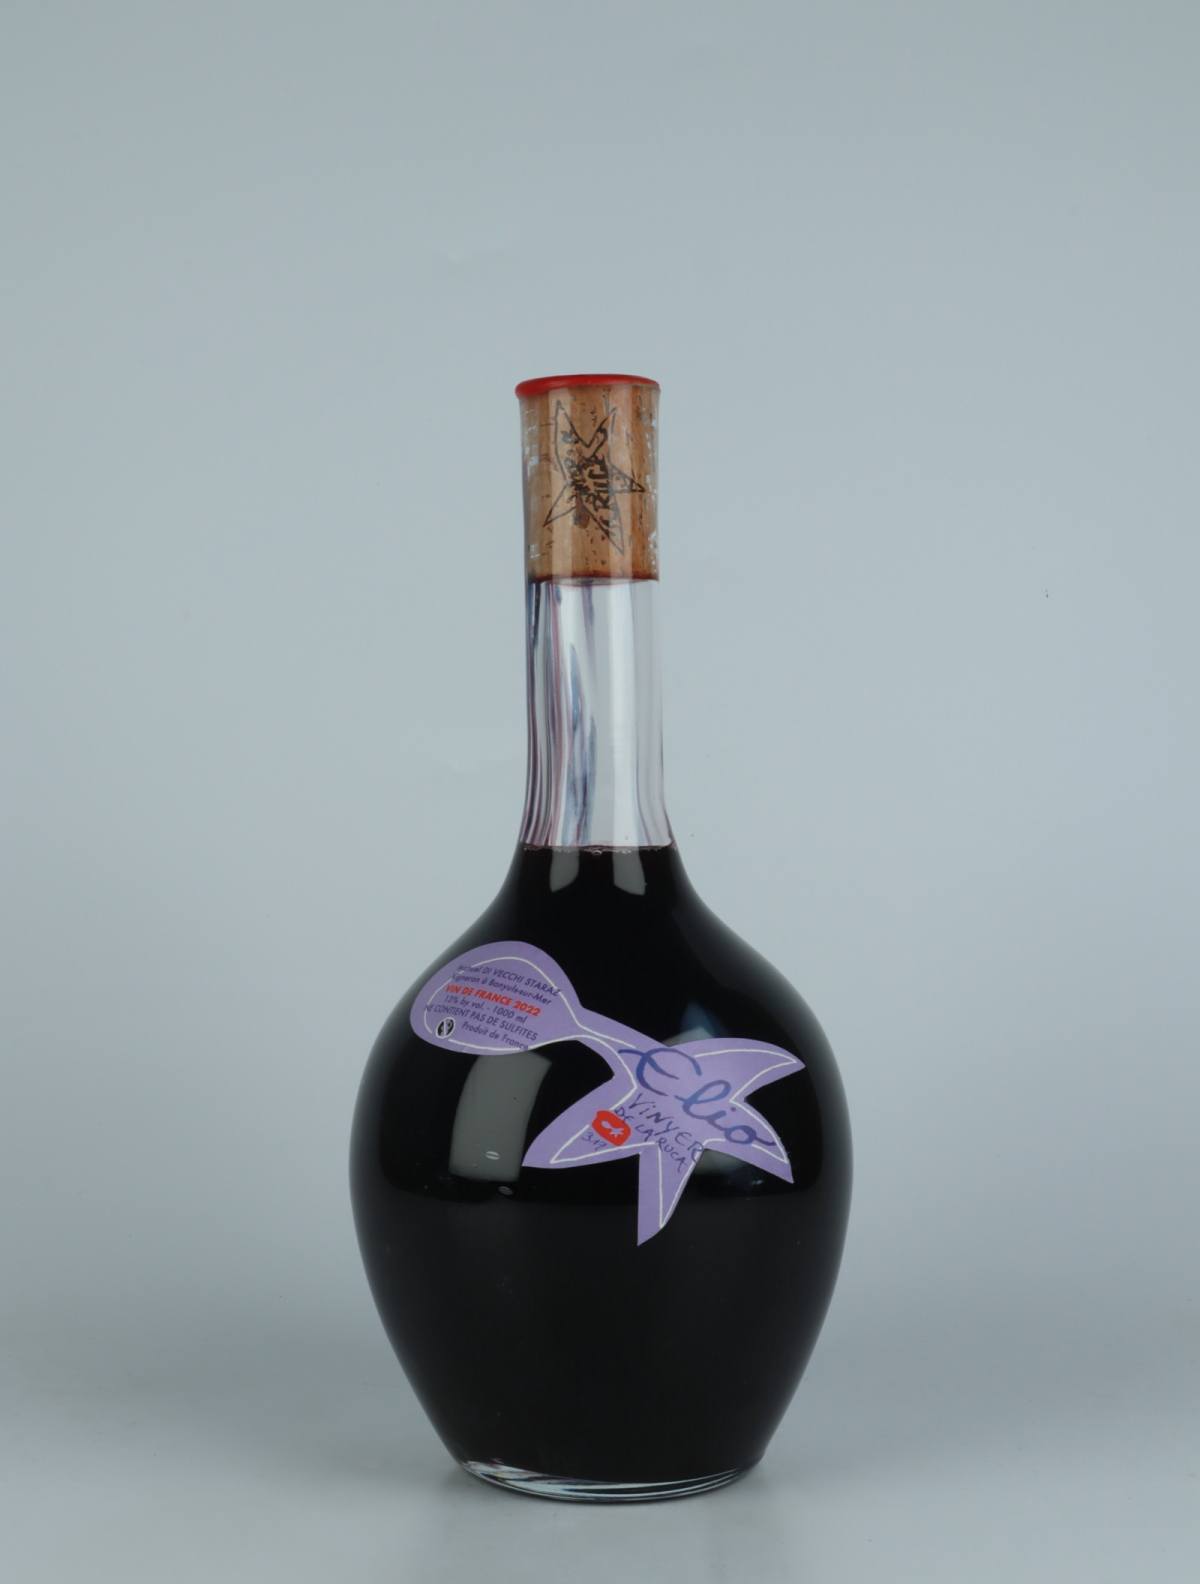 A bottle 2022 Elio Red wine from Vinyer de la Ruca, Rousillon in France